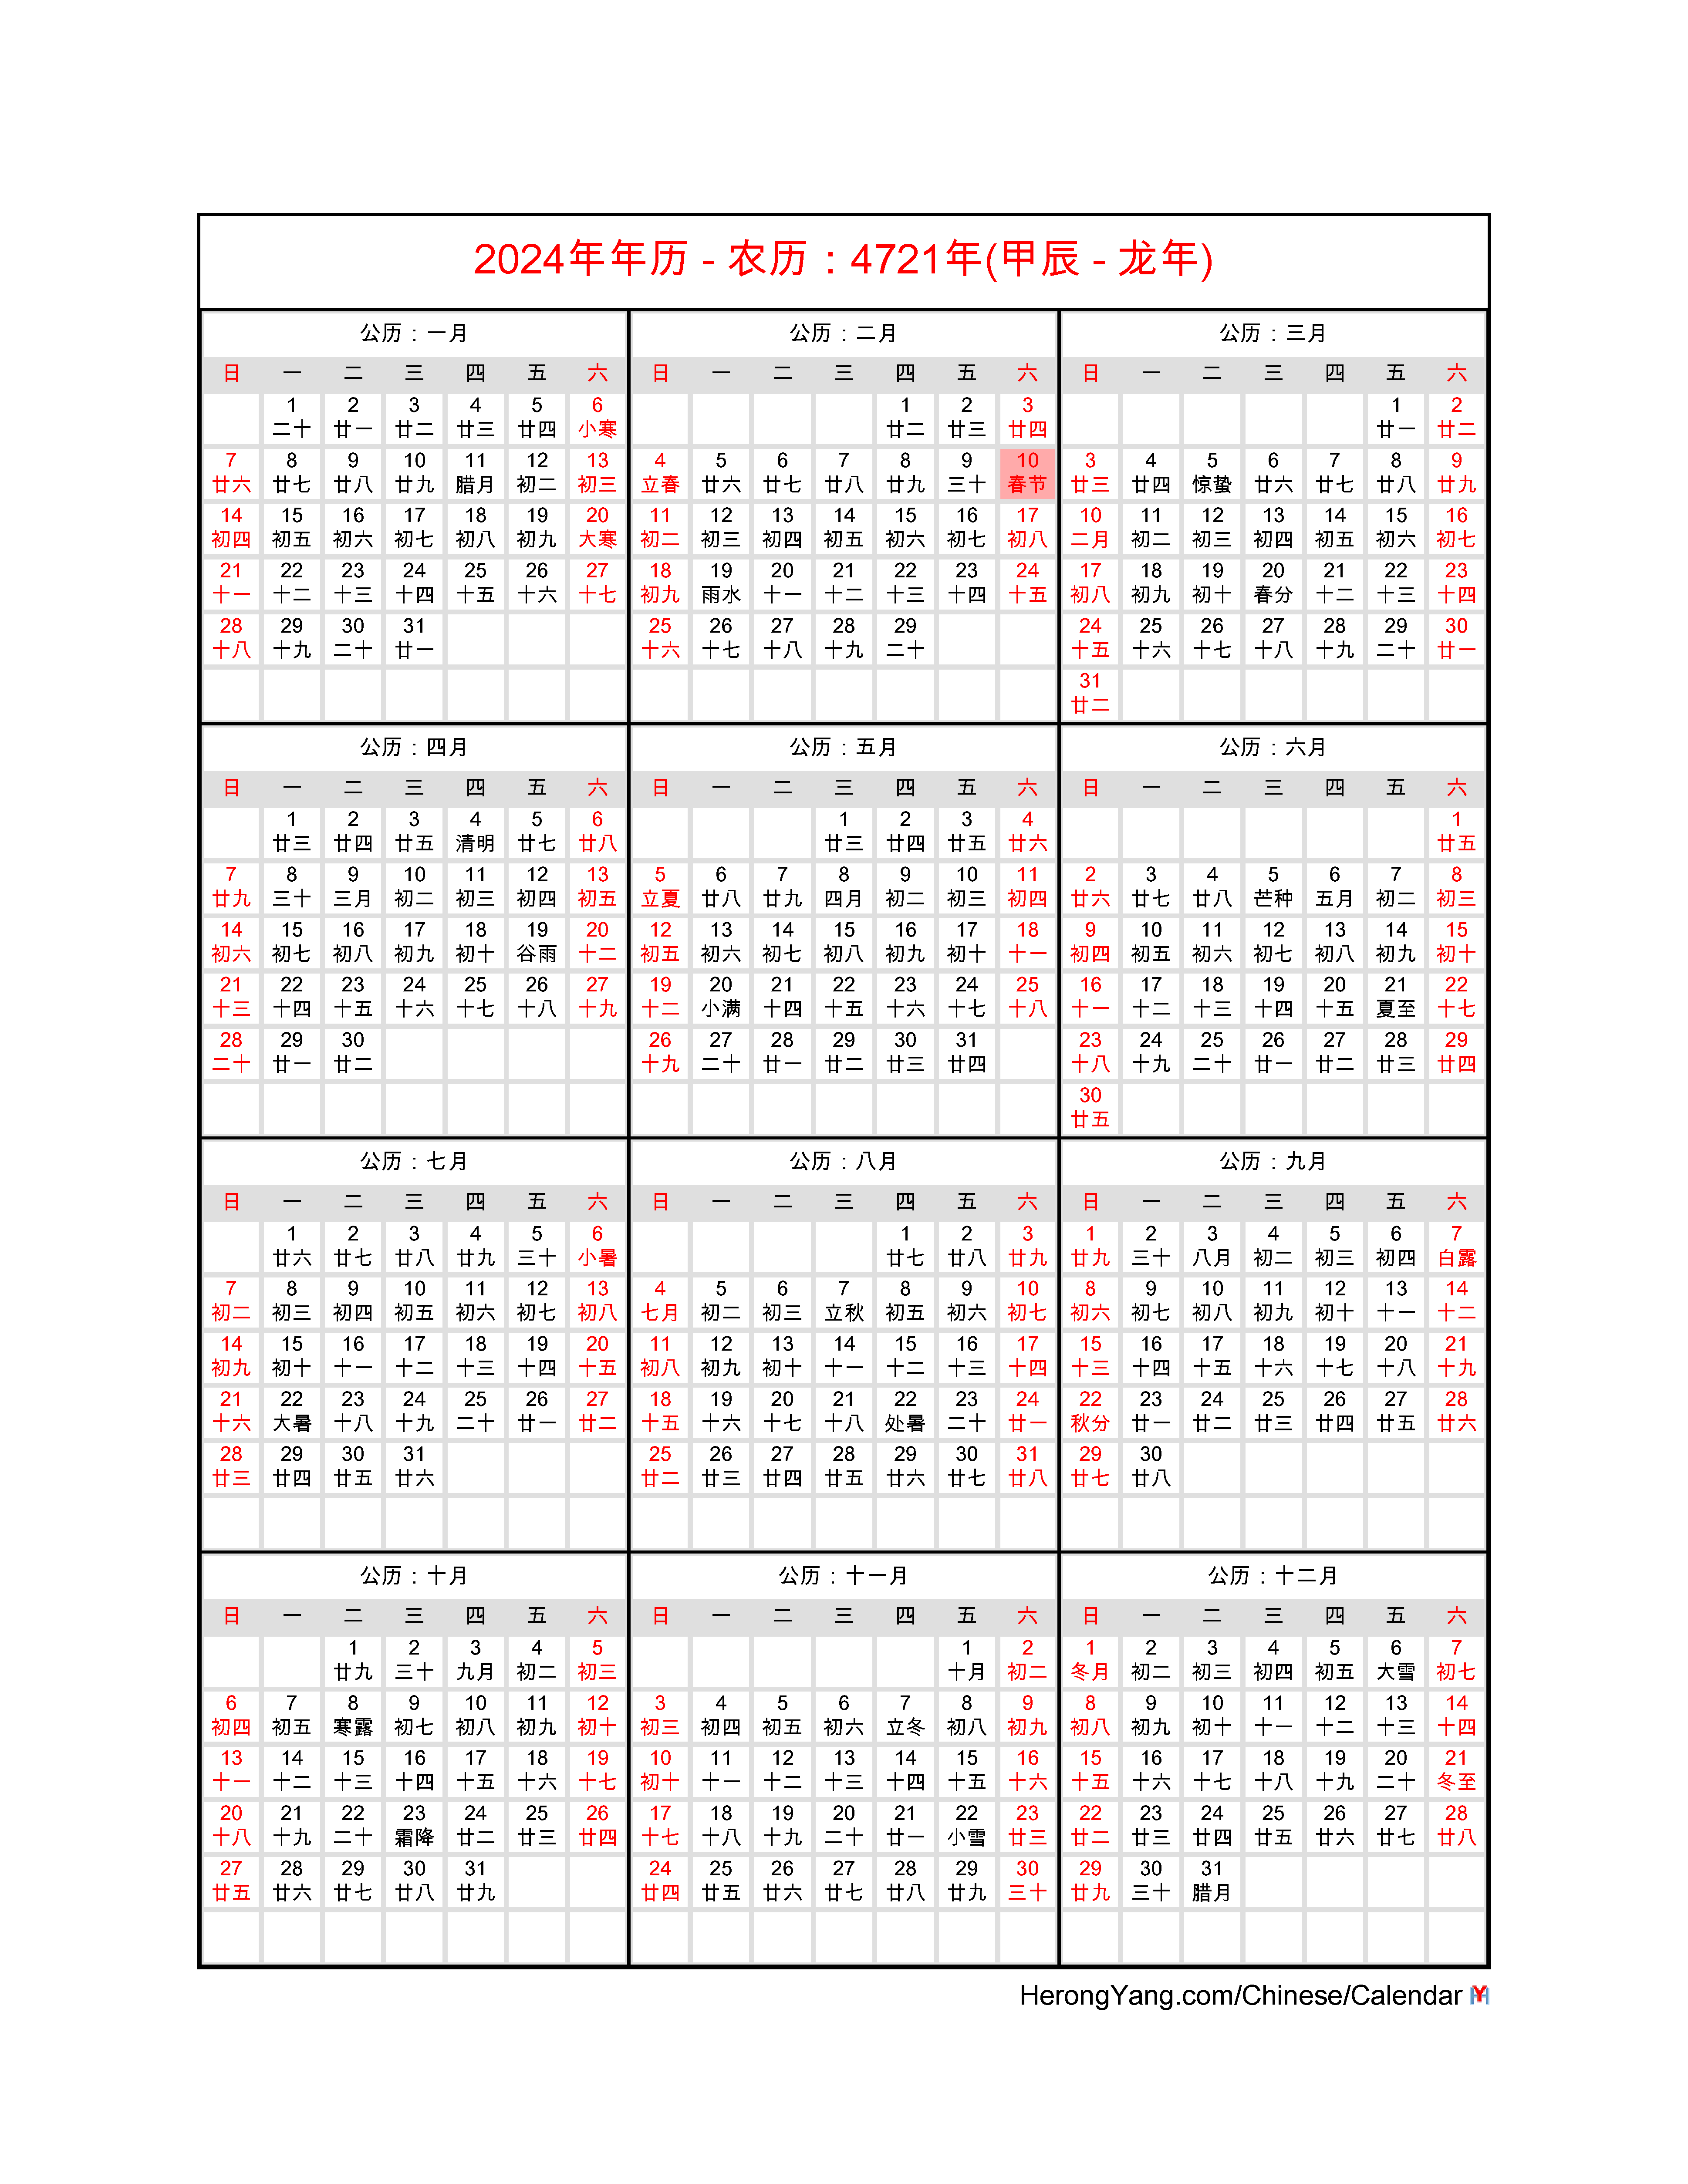 Chinese Calendar 2024 With Holidays Disney Calendar 2024